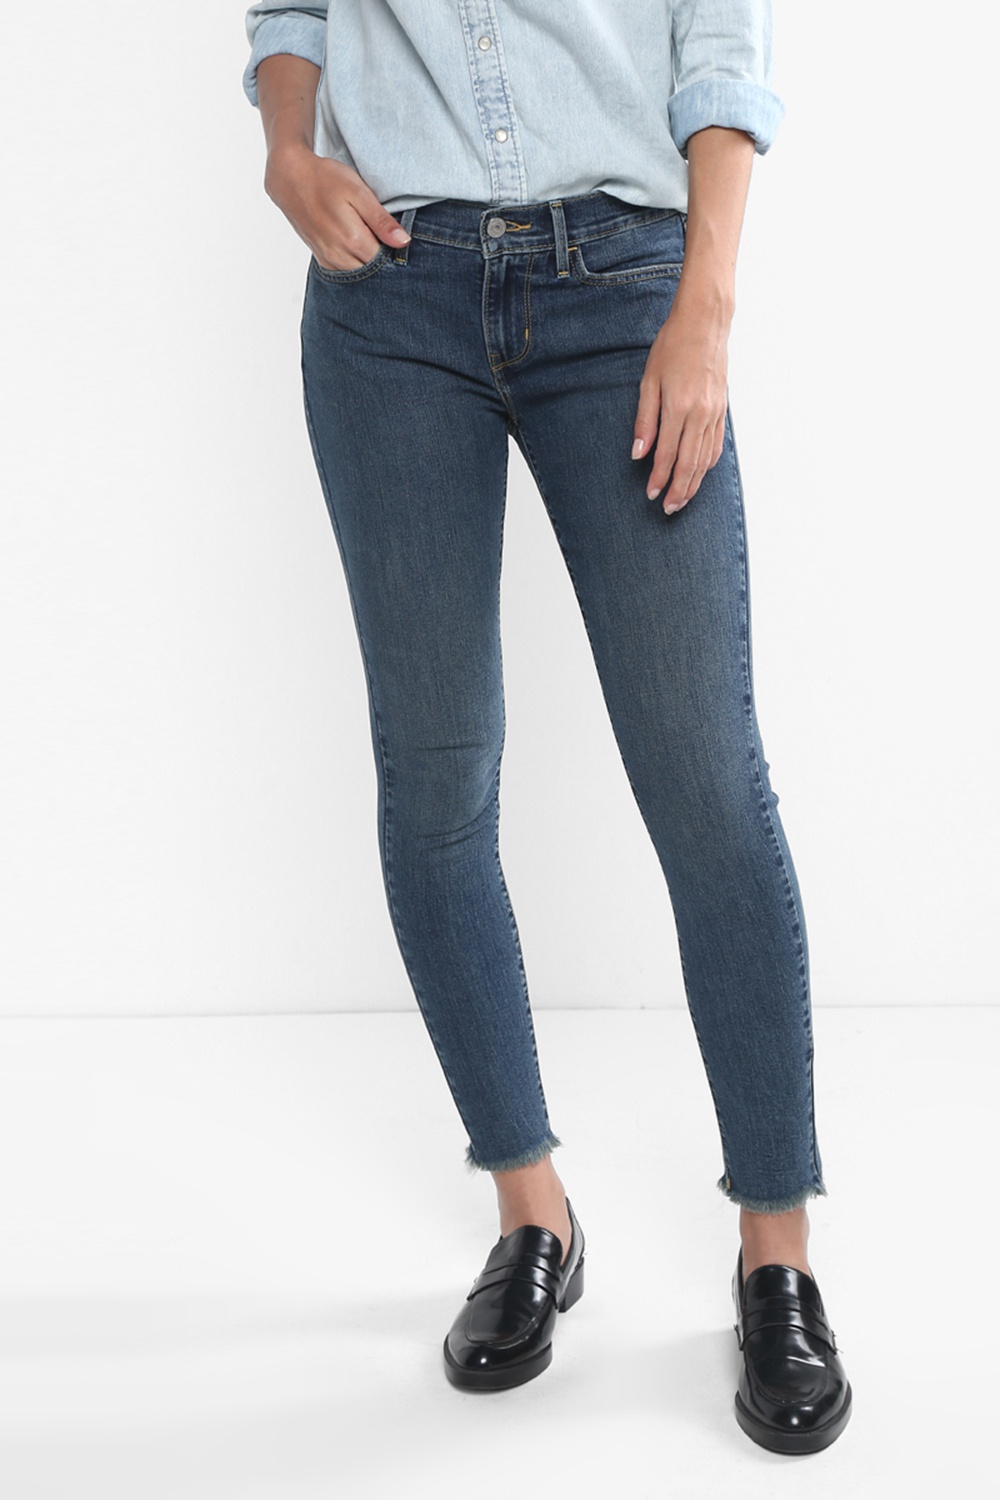 Levi's 710 Super Skinny Women's Jeans 